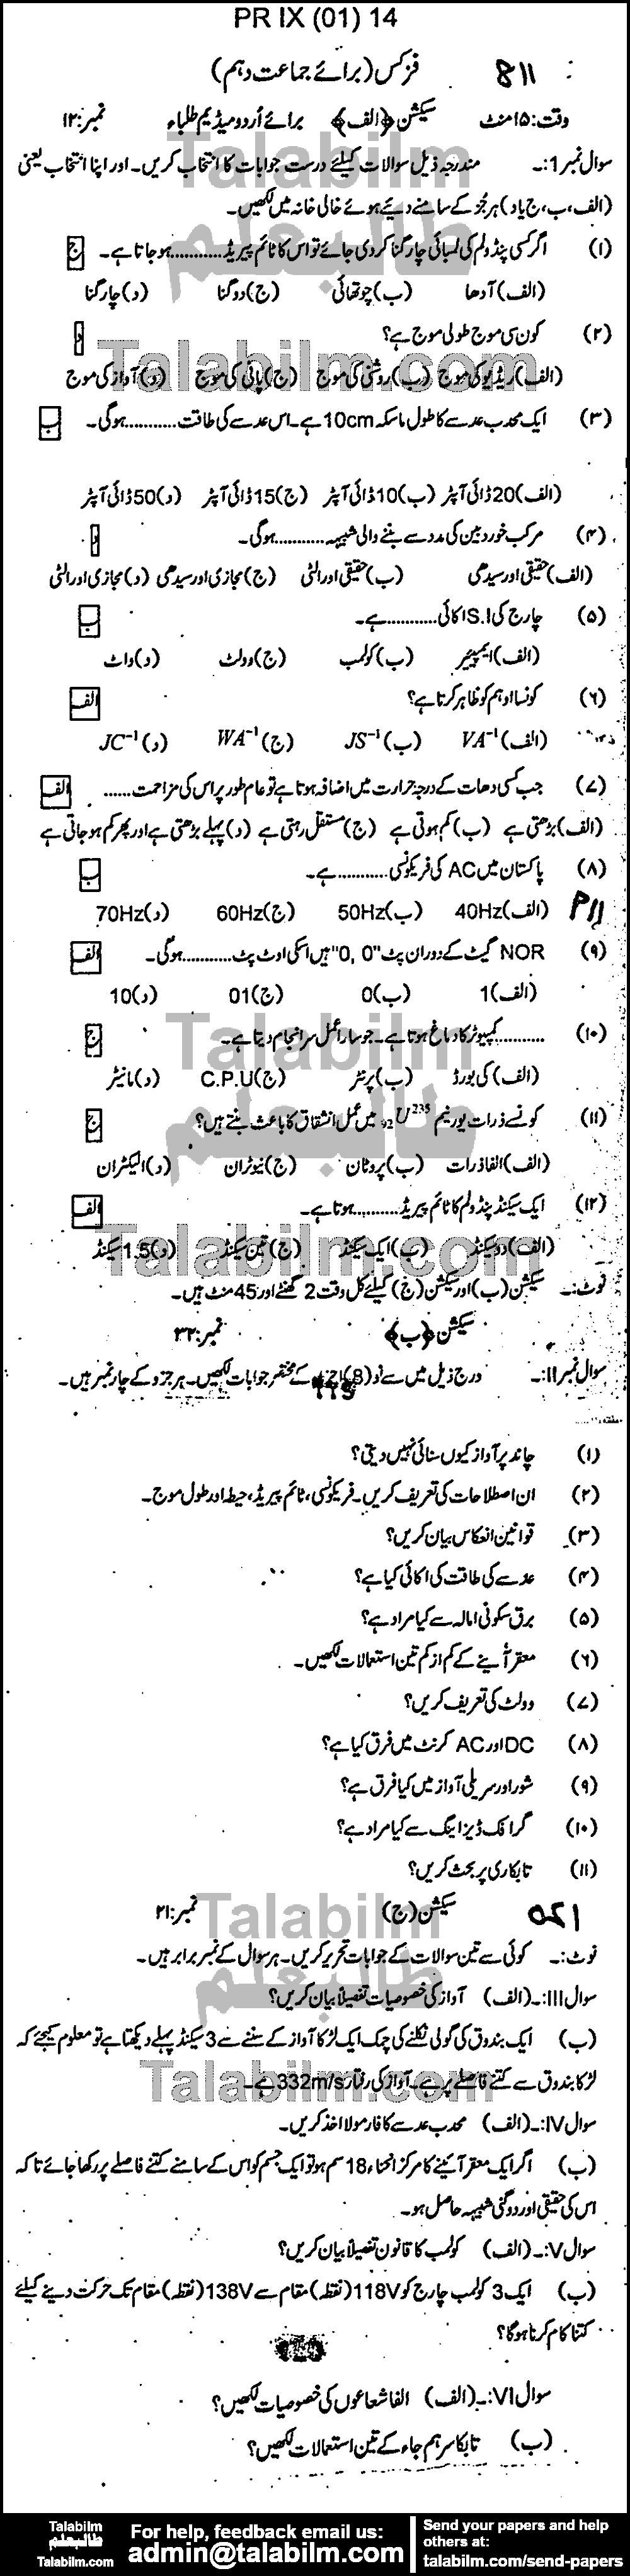 Physics 0 past paper for Urdu Medium 2014 Group-I